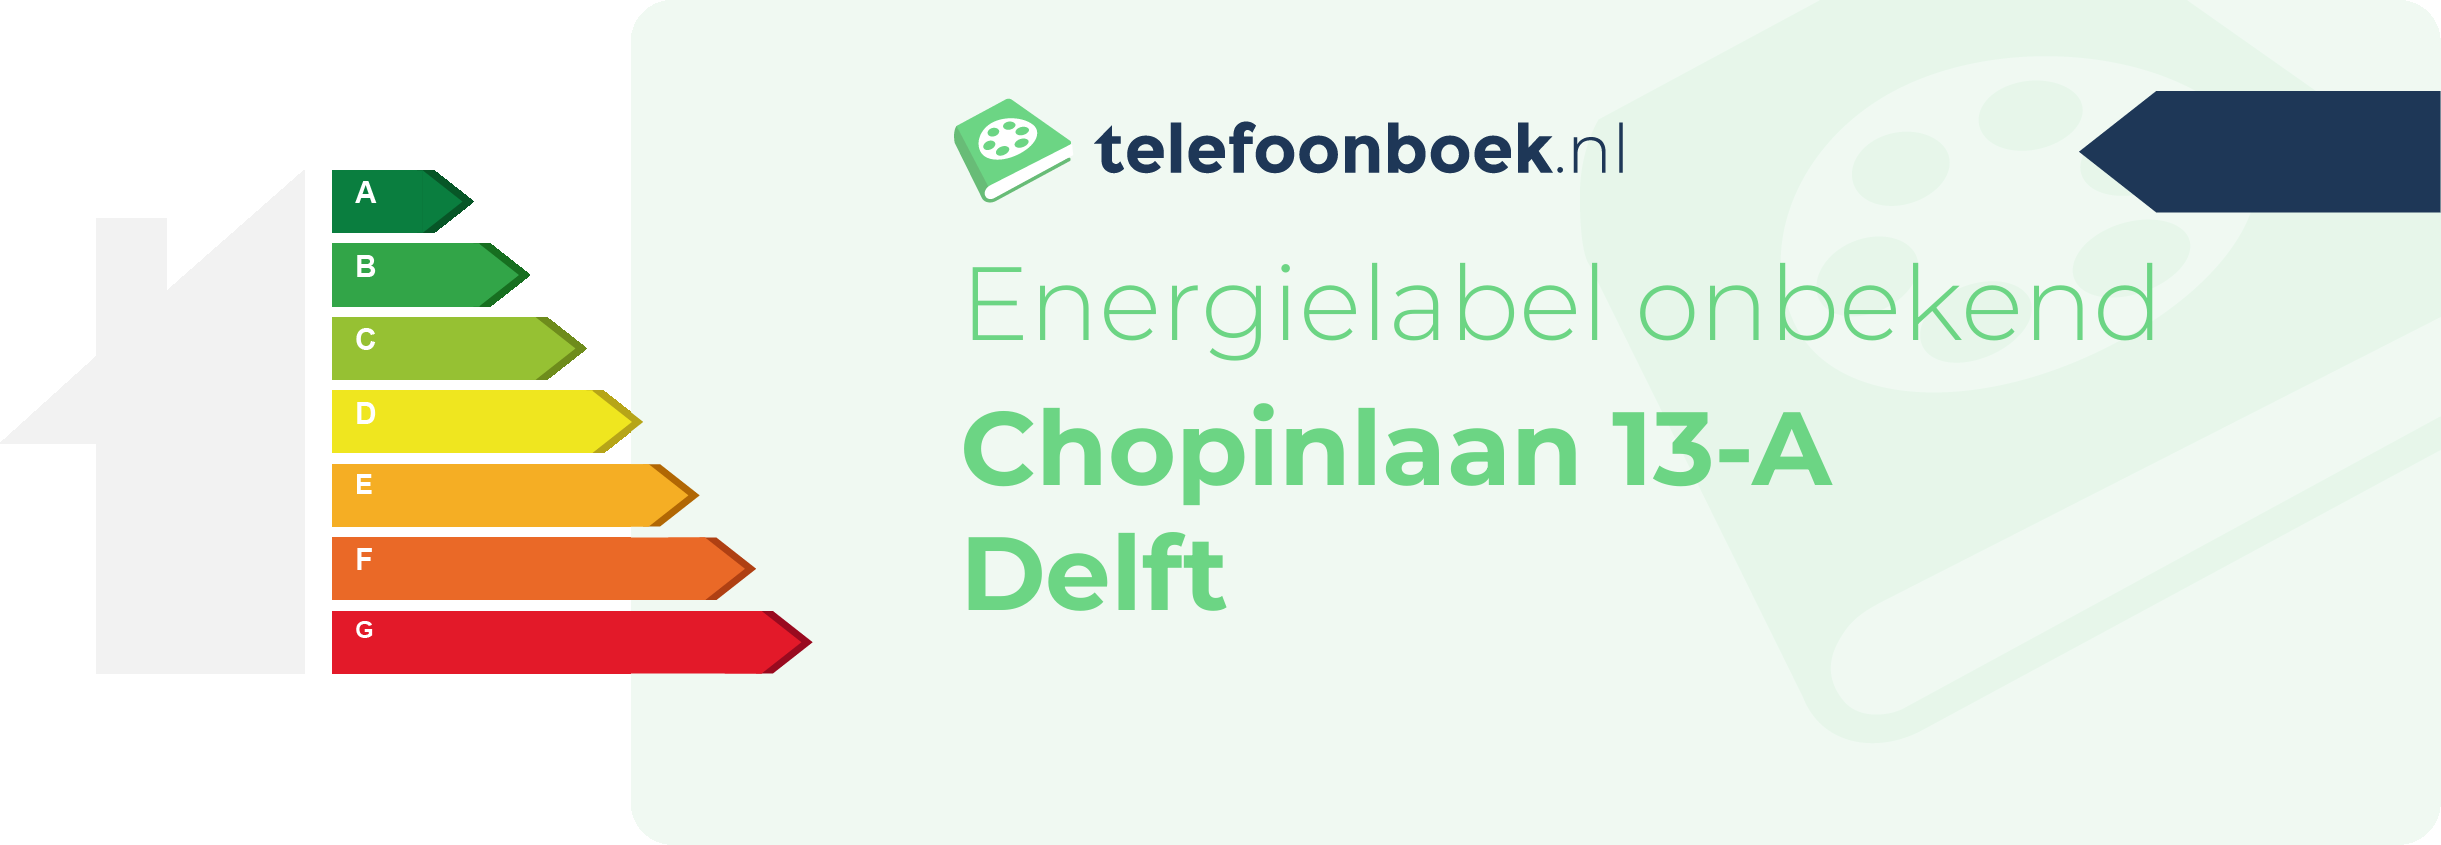 Energielabel Chopinlaan 13-A Delft